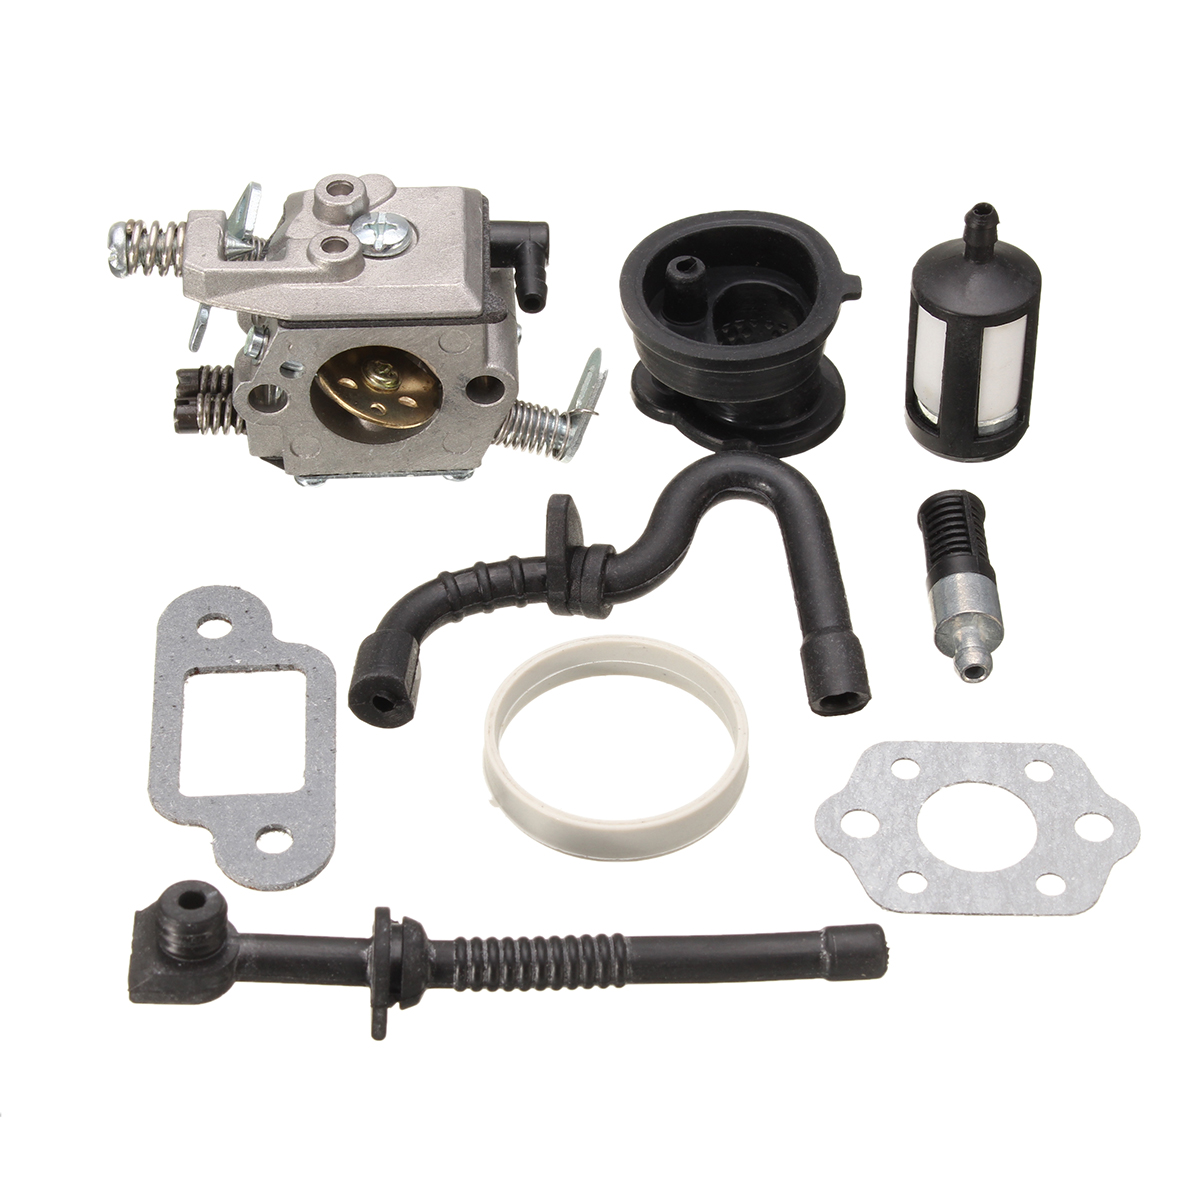 

Carburetor Fuel Line Filter Gasket Kit For STIHL 017 018 MS170 MS180 Chainsaw